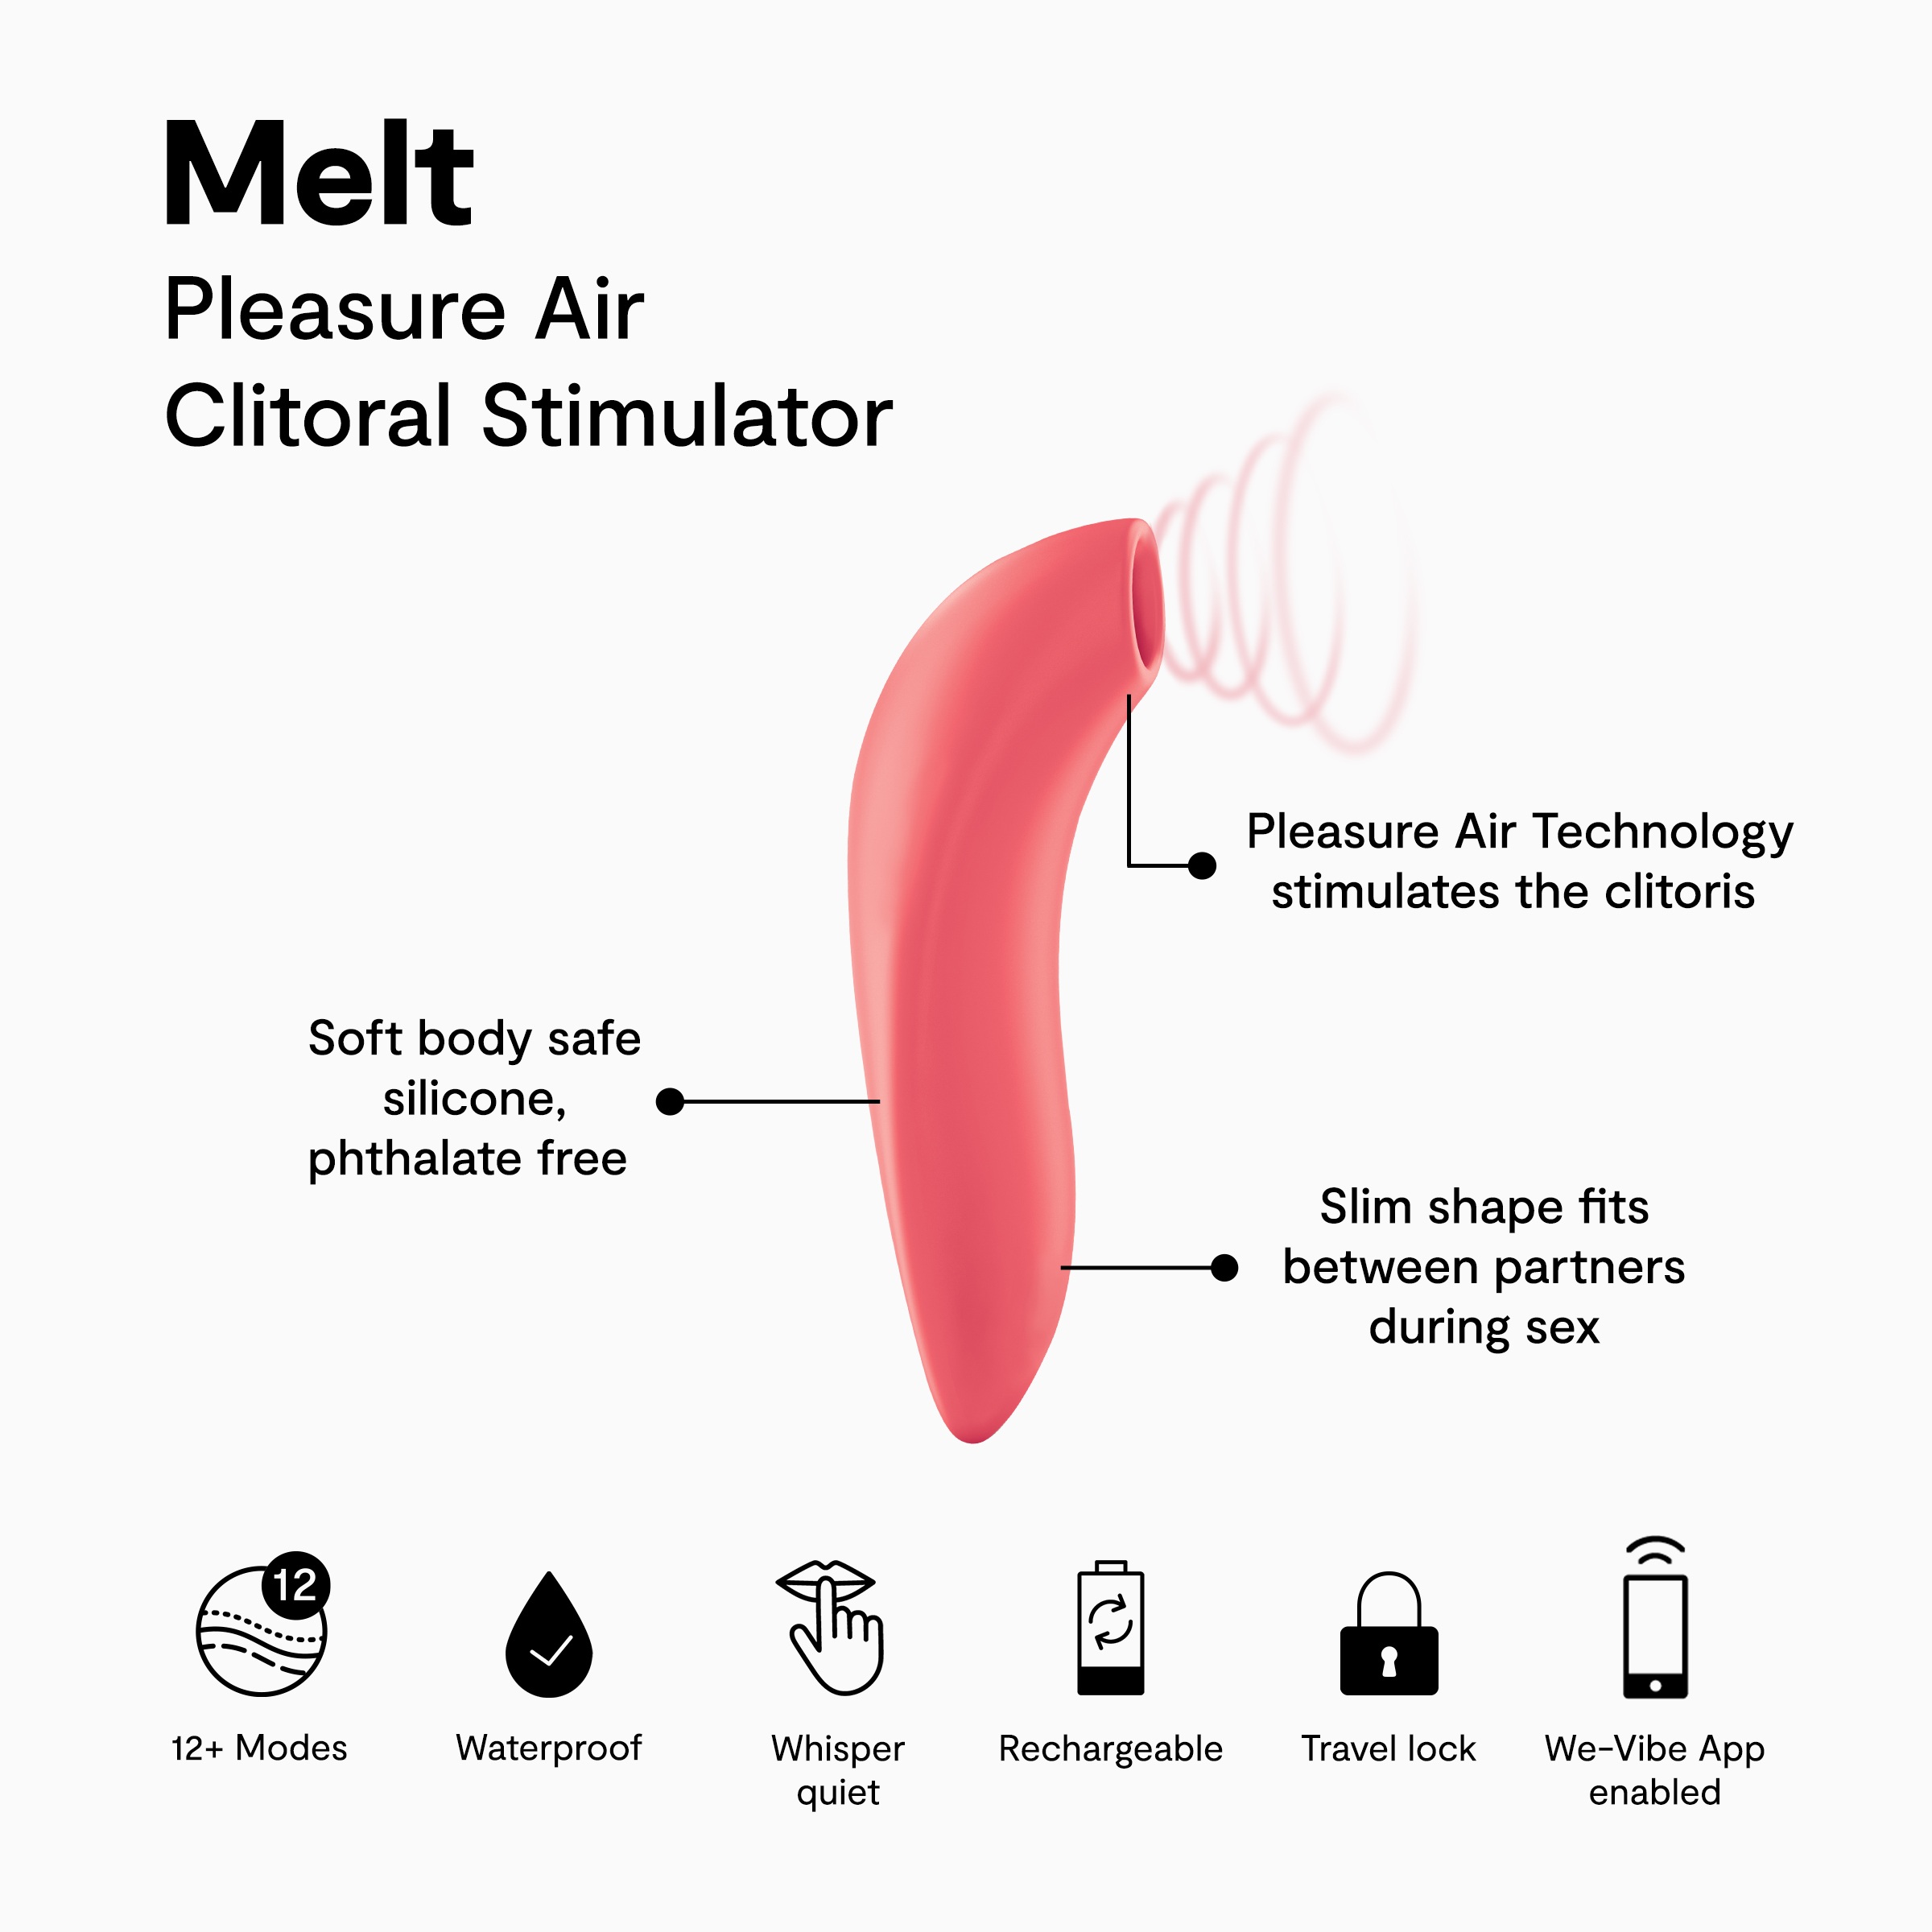 We-Vibe Melt Pleasure Air Stimulator with App, Pink - image 2 of 10